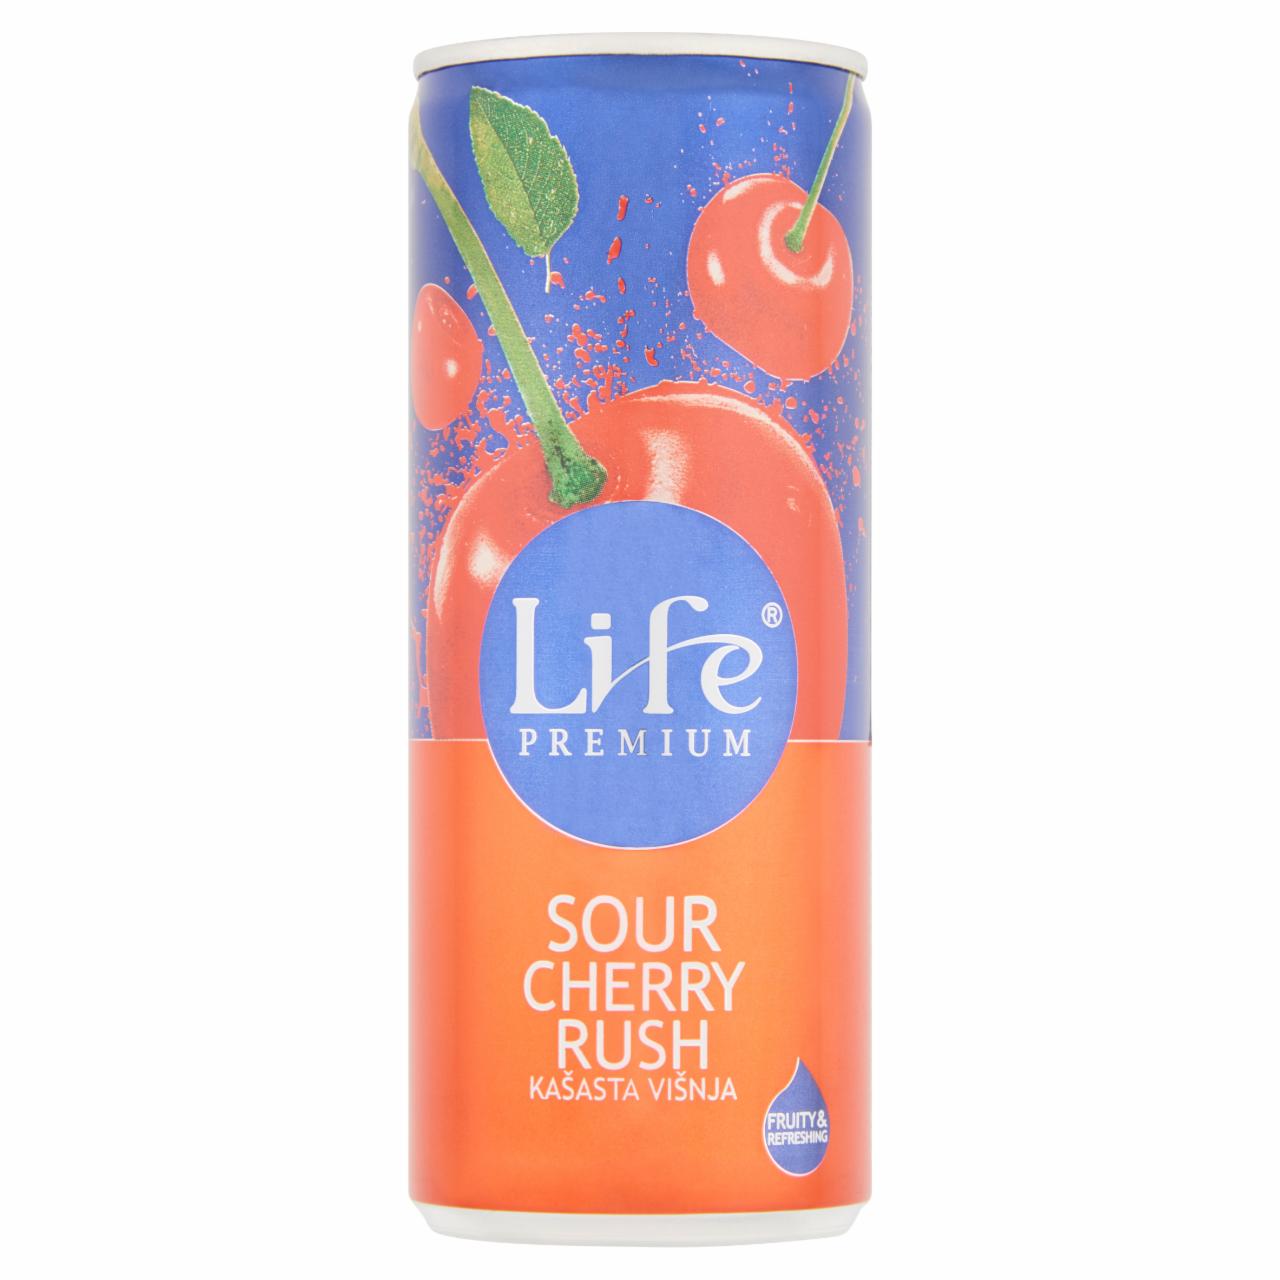 Képek - Life Premium Sour Cherry Rush rostos meggynektár 250 ml